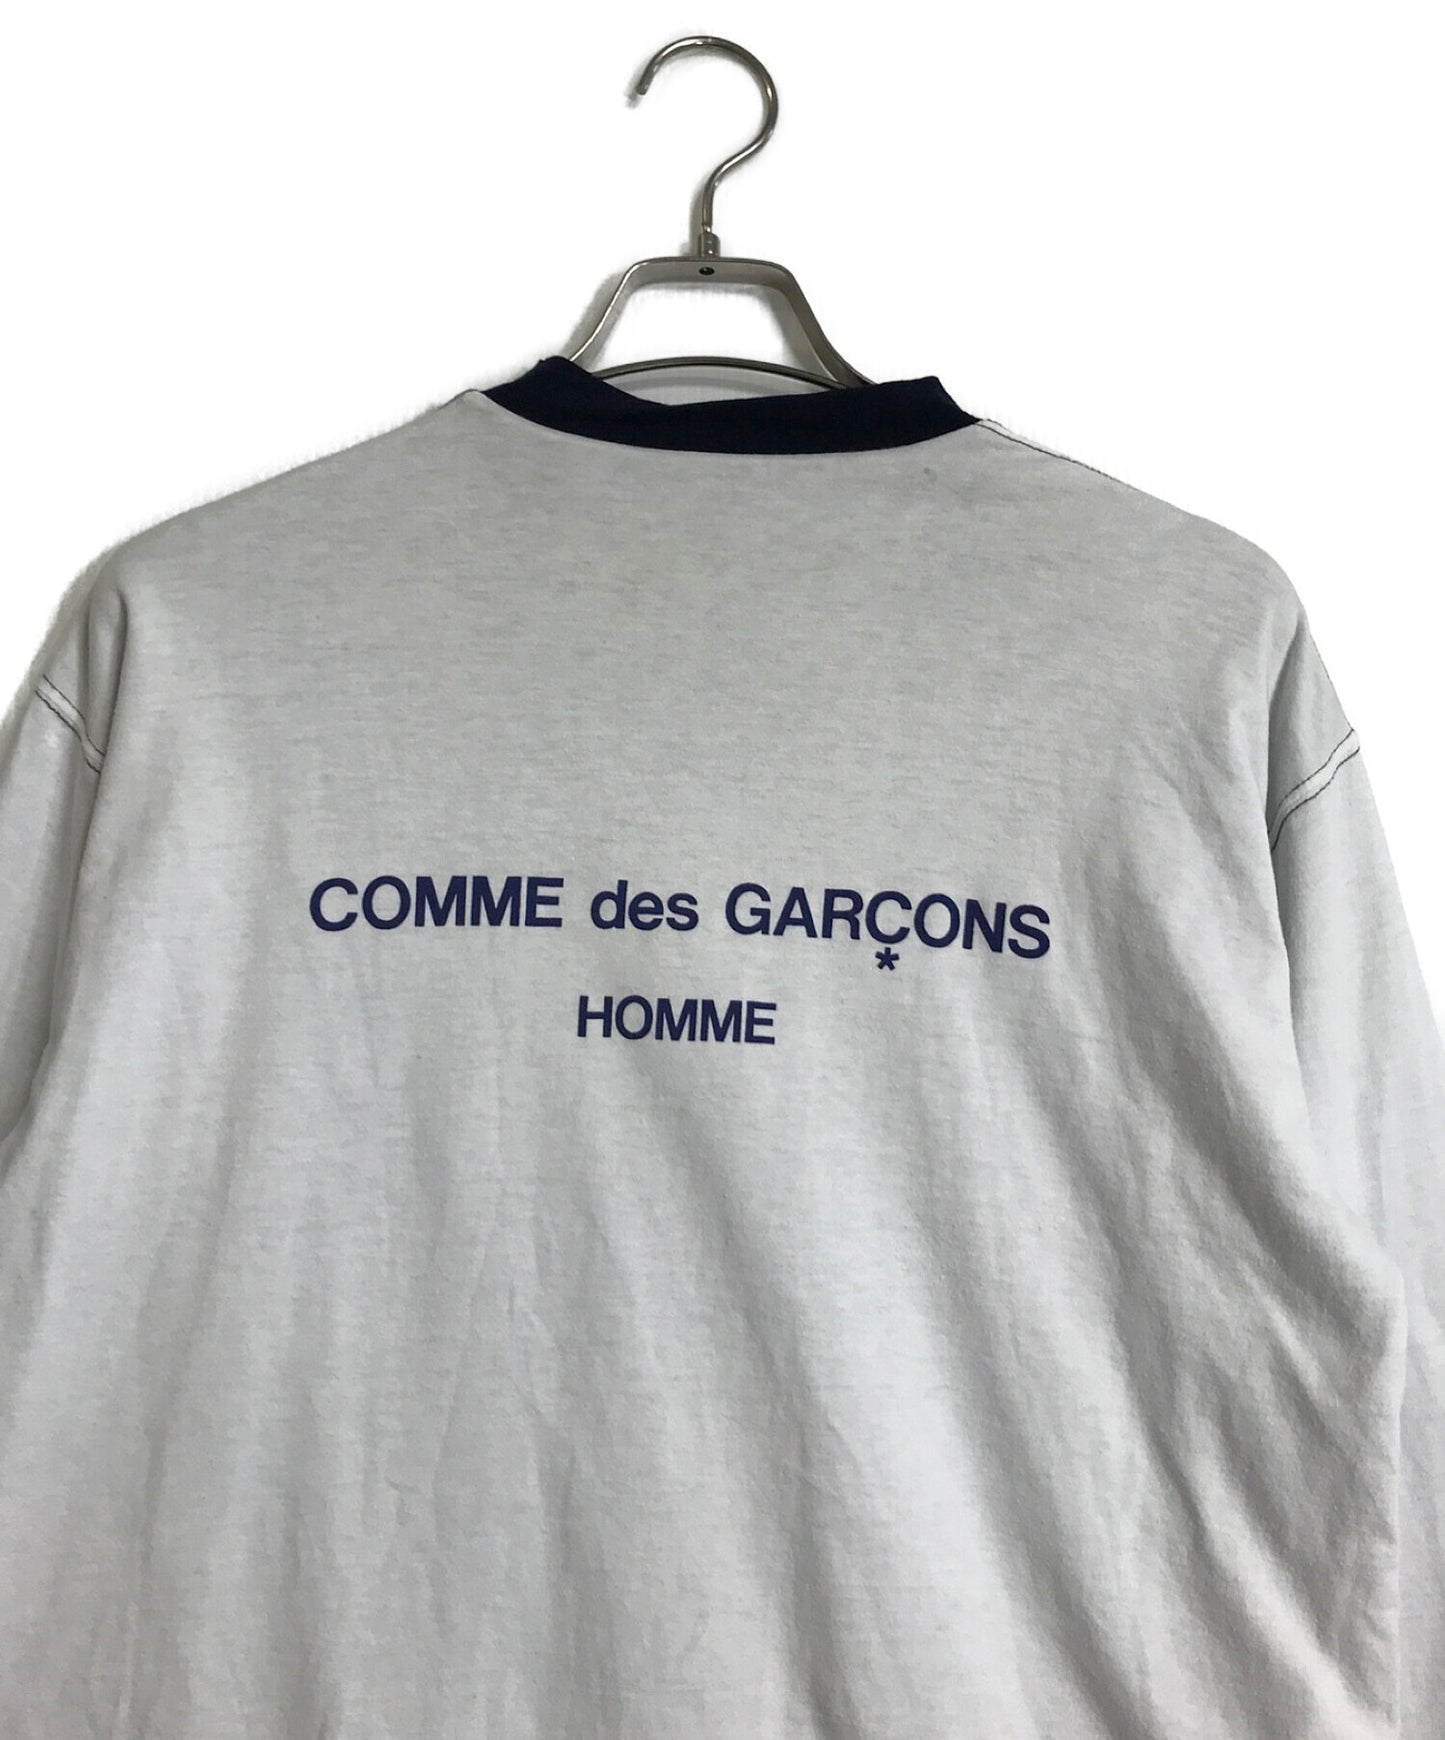 Comme des Garcons Homme 90 การตัดโลโก้แบบย้อนกลับได้และเย็บ HT-040280